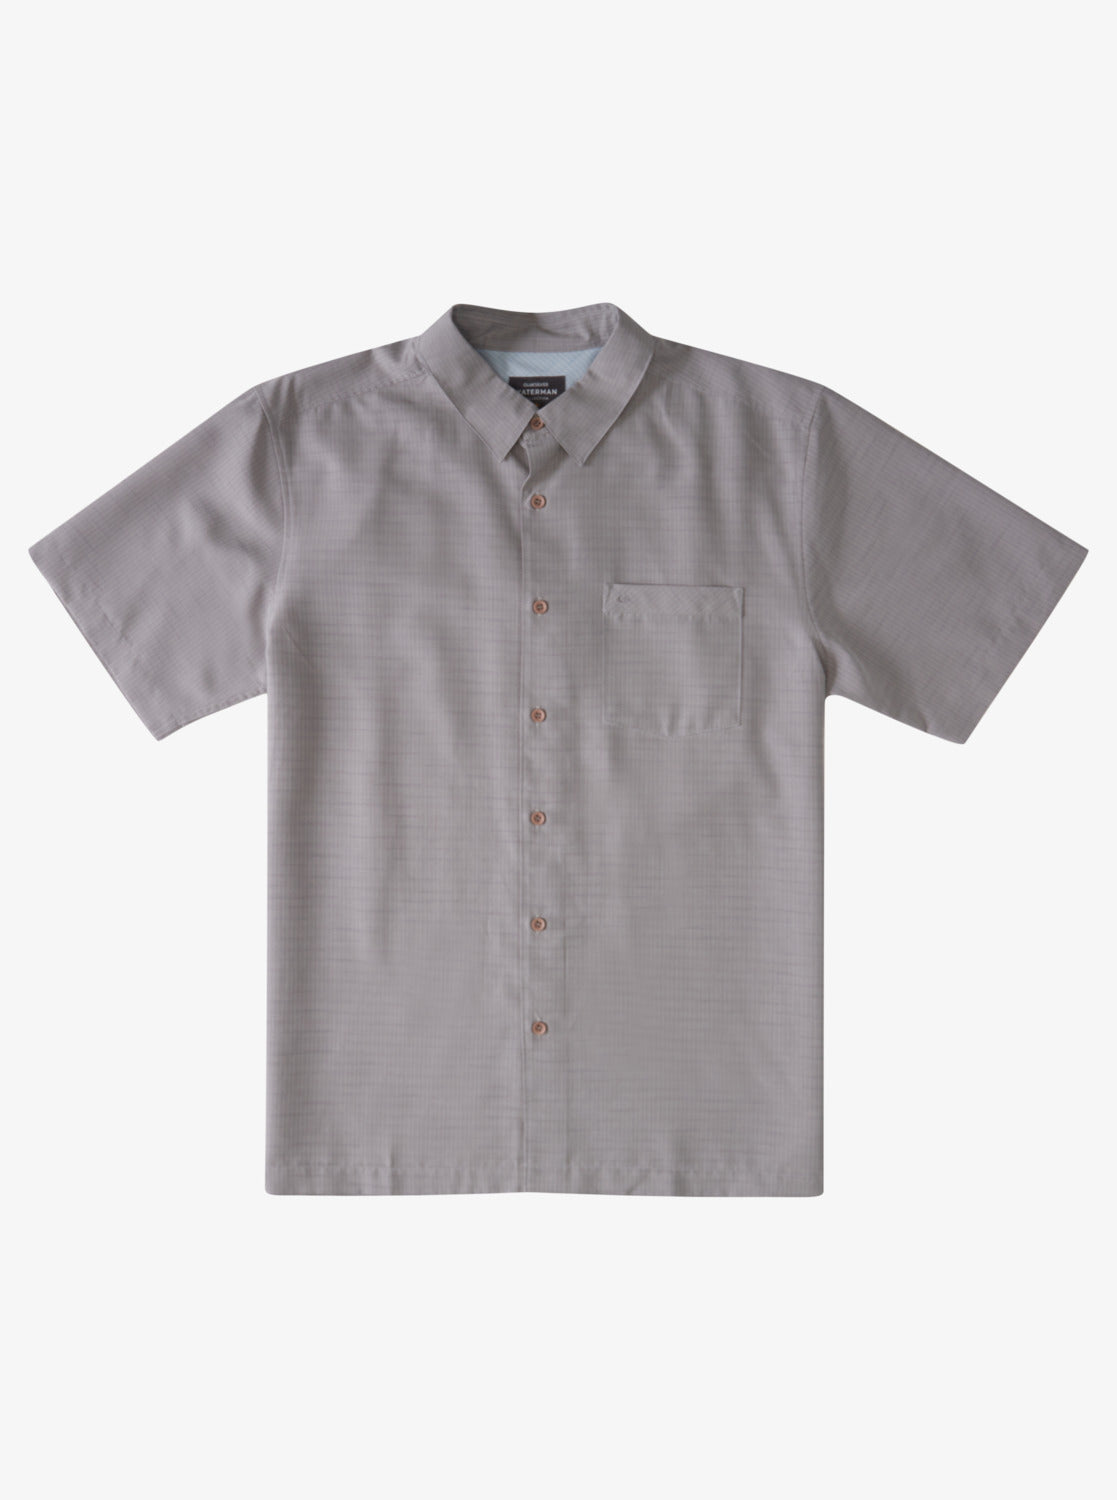 Waterman Centinela Premium Anti-Wrinkle Shirt - Flint Gray Centinella